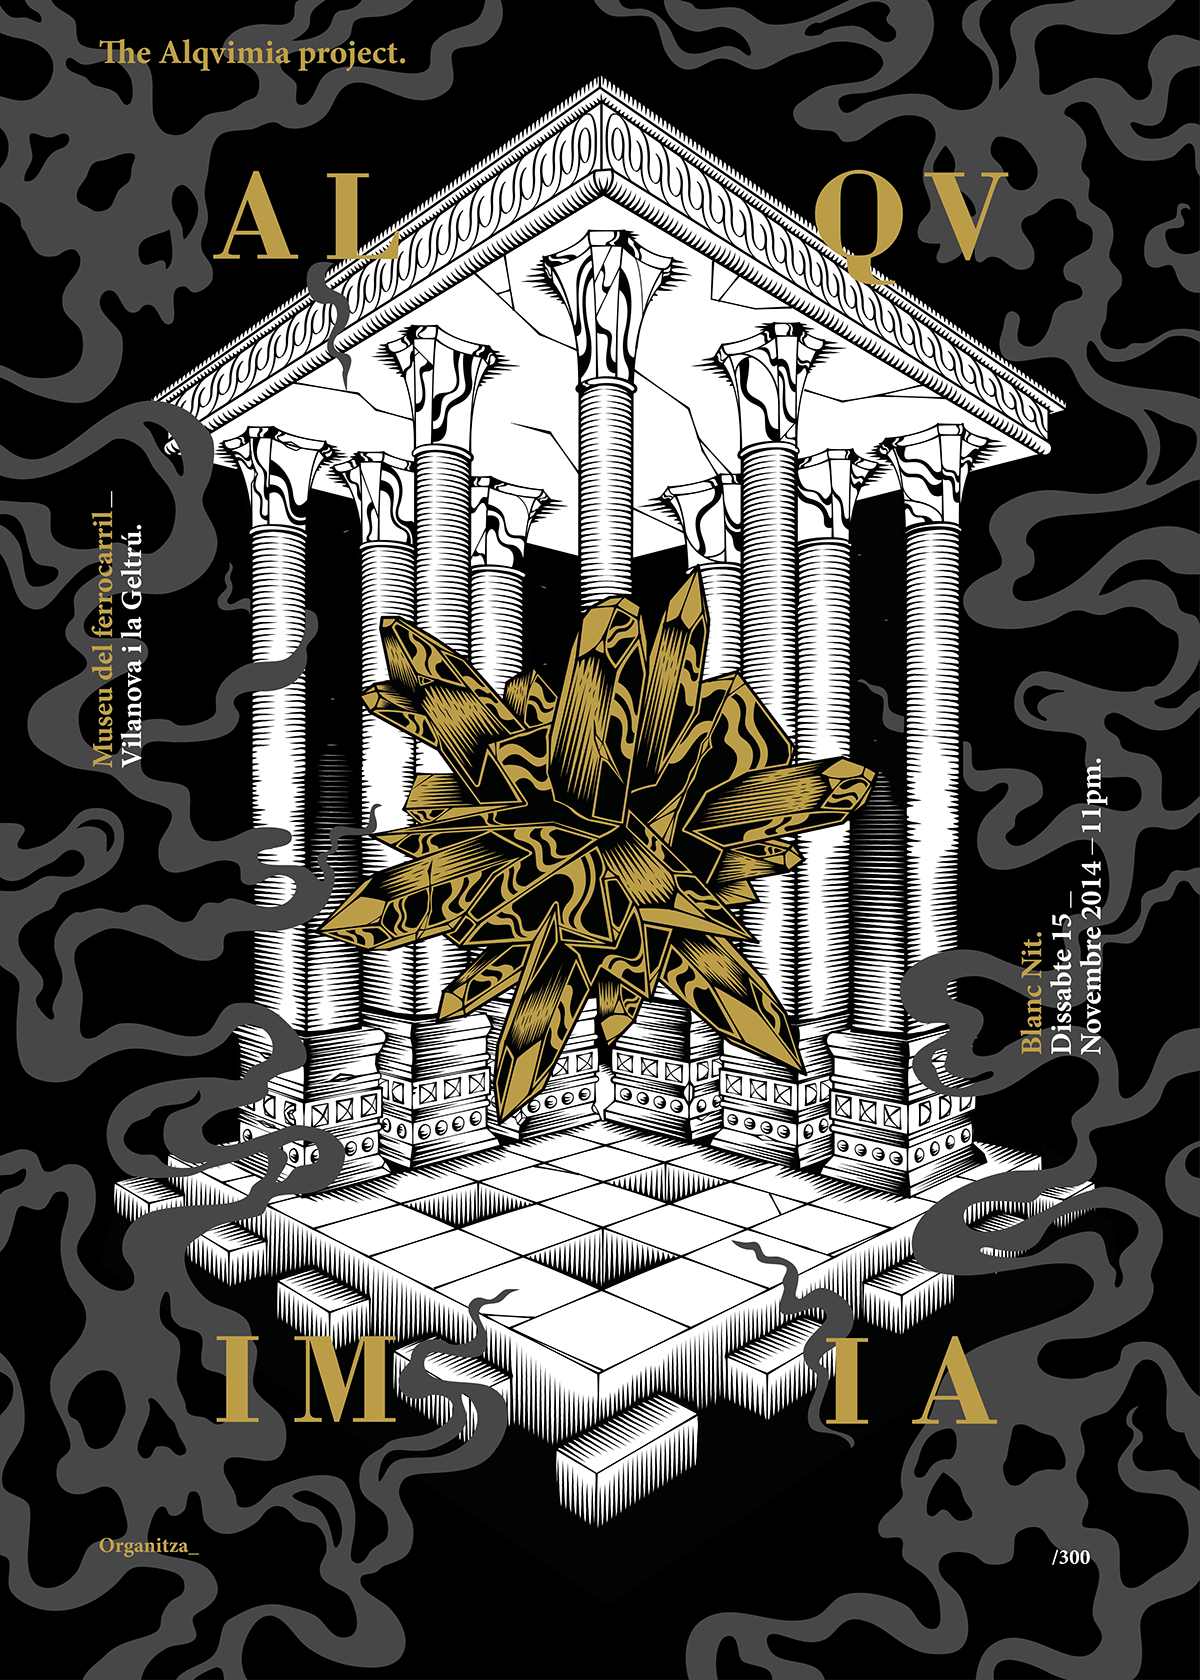 barcelona fest blanc design diseño diseño gráfico poster festival screenprint print black gold alchemy